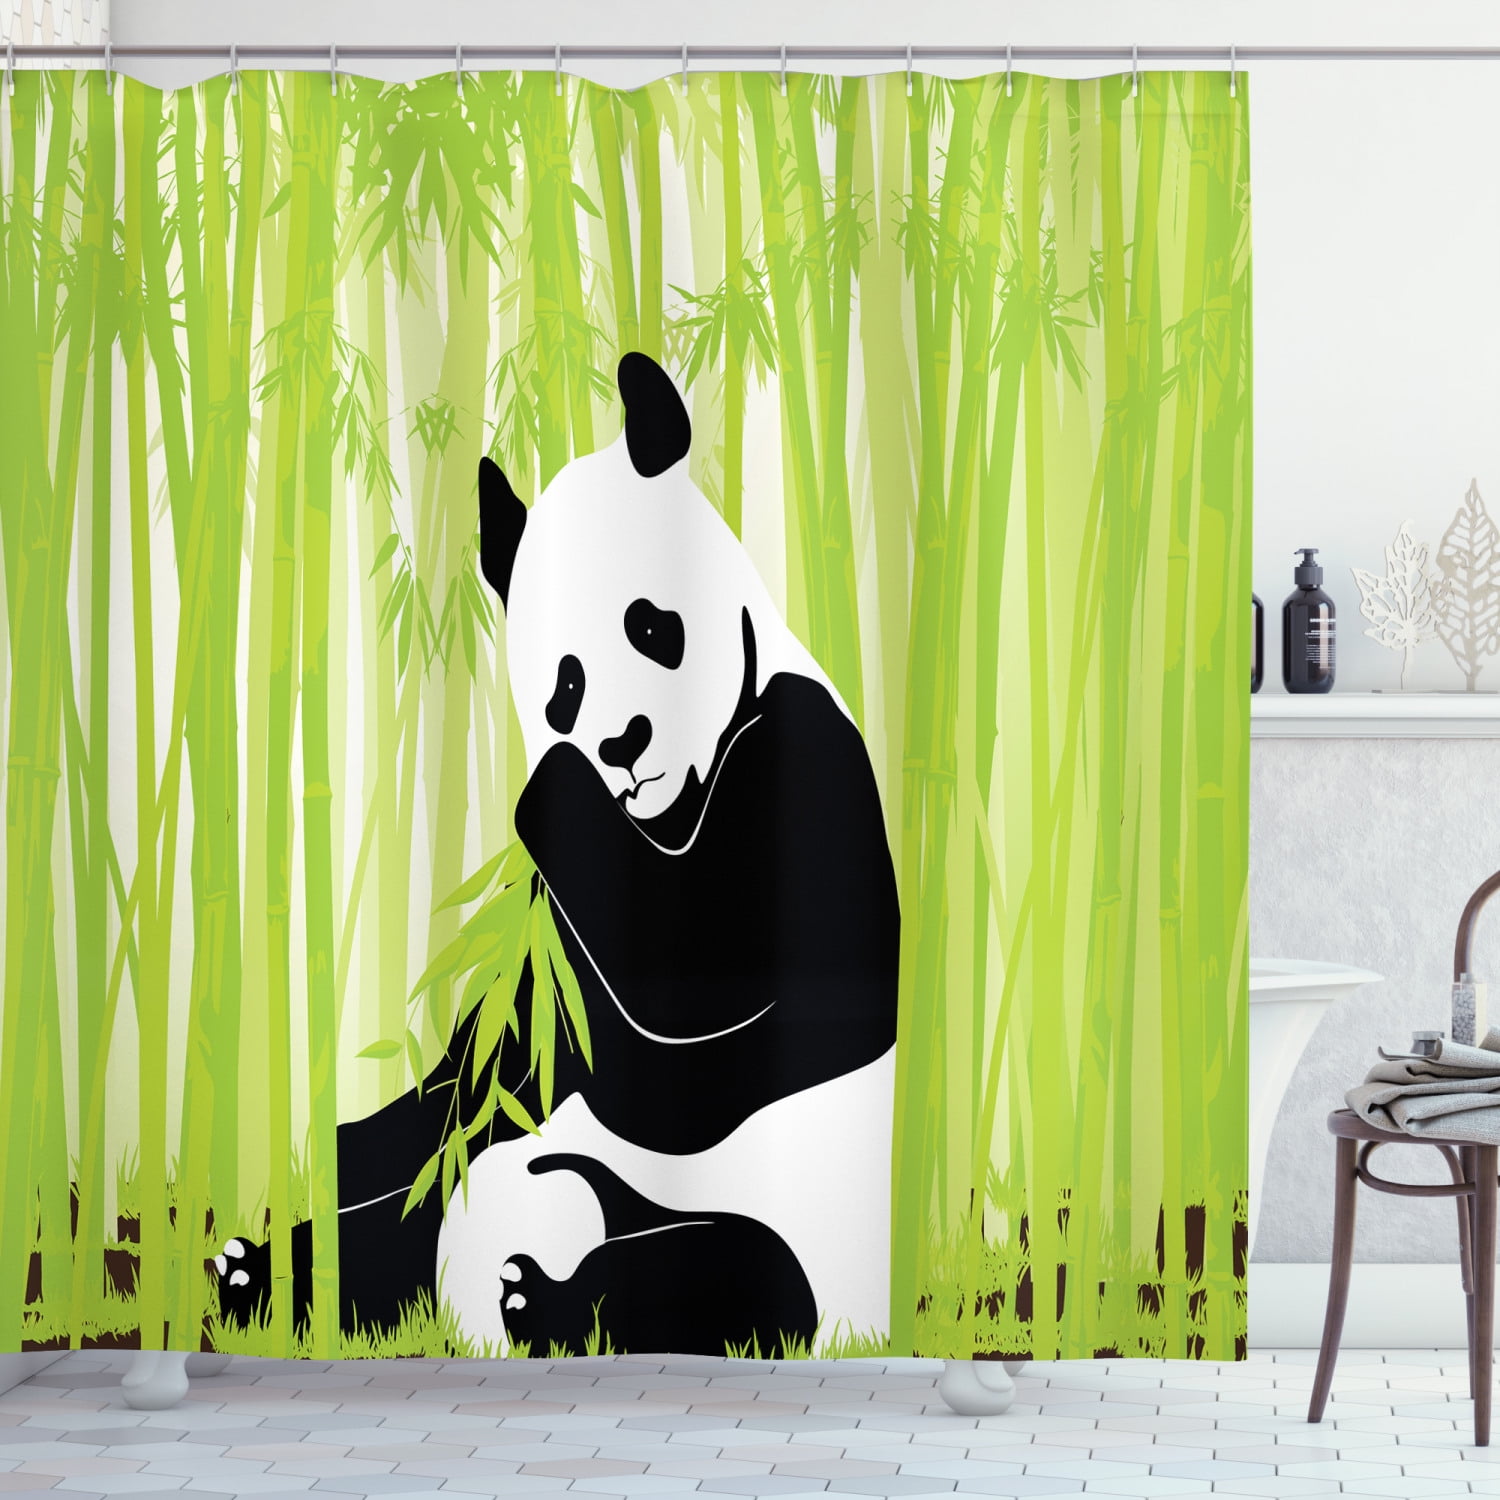 Cartoon Style Wild Animals in Bamboo Forest Shower Curtain Set Bathroom Decor LB 